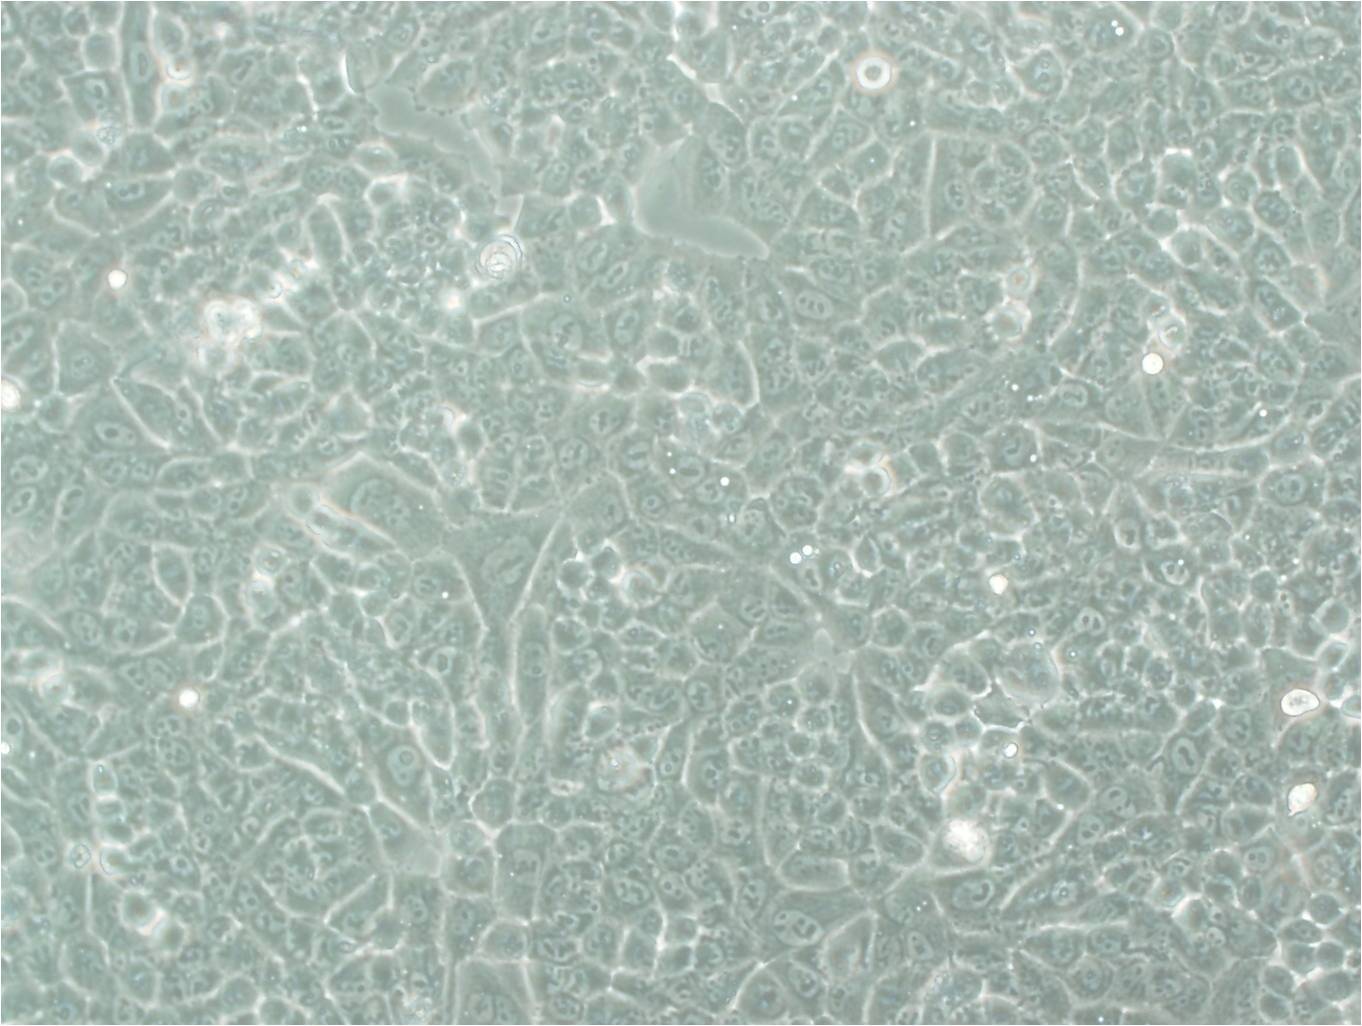 SNU-878 Cells(赠送Str鉴定报告)|人肝癌细胞,SNU-878 Cells